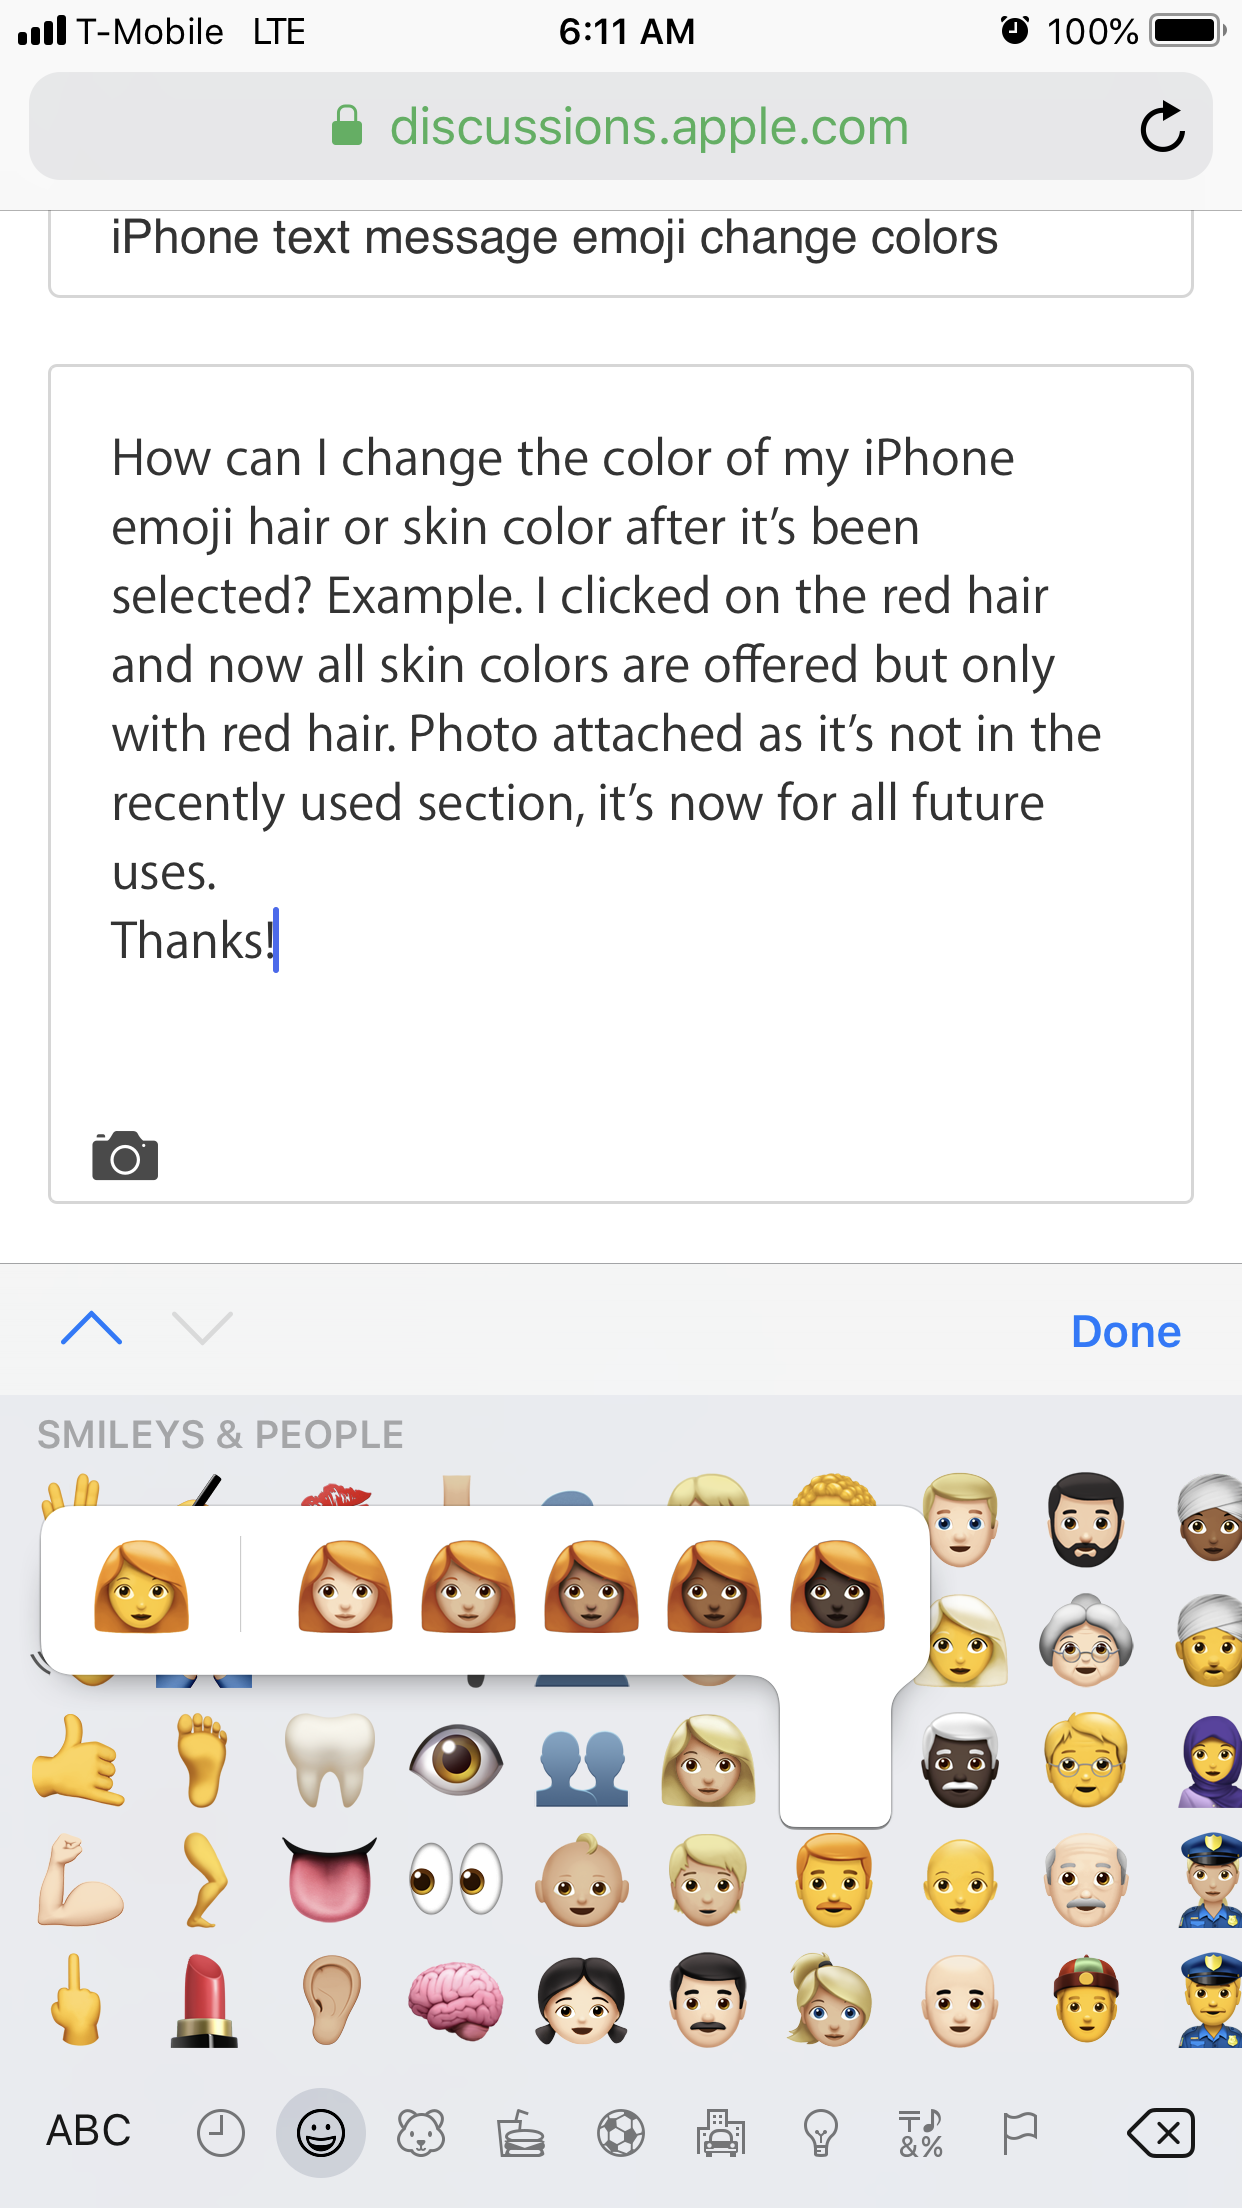 iPhone text message emoji change colors